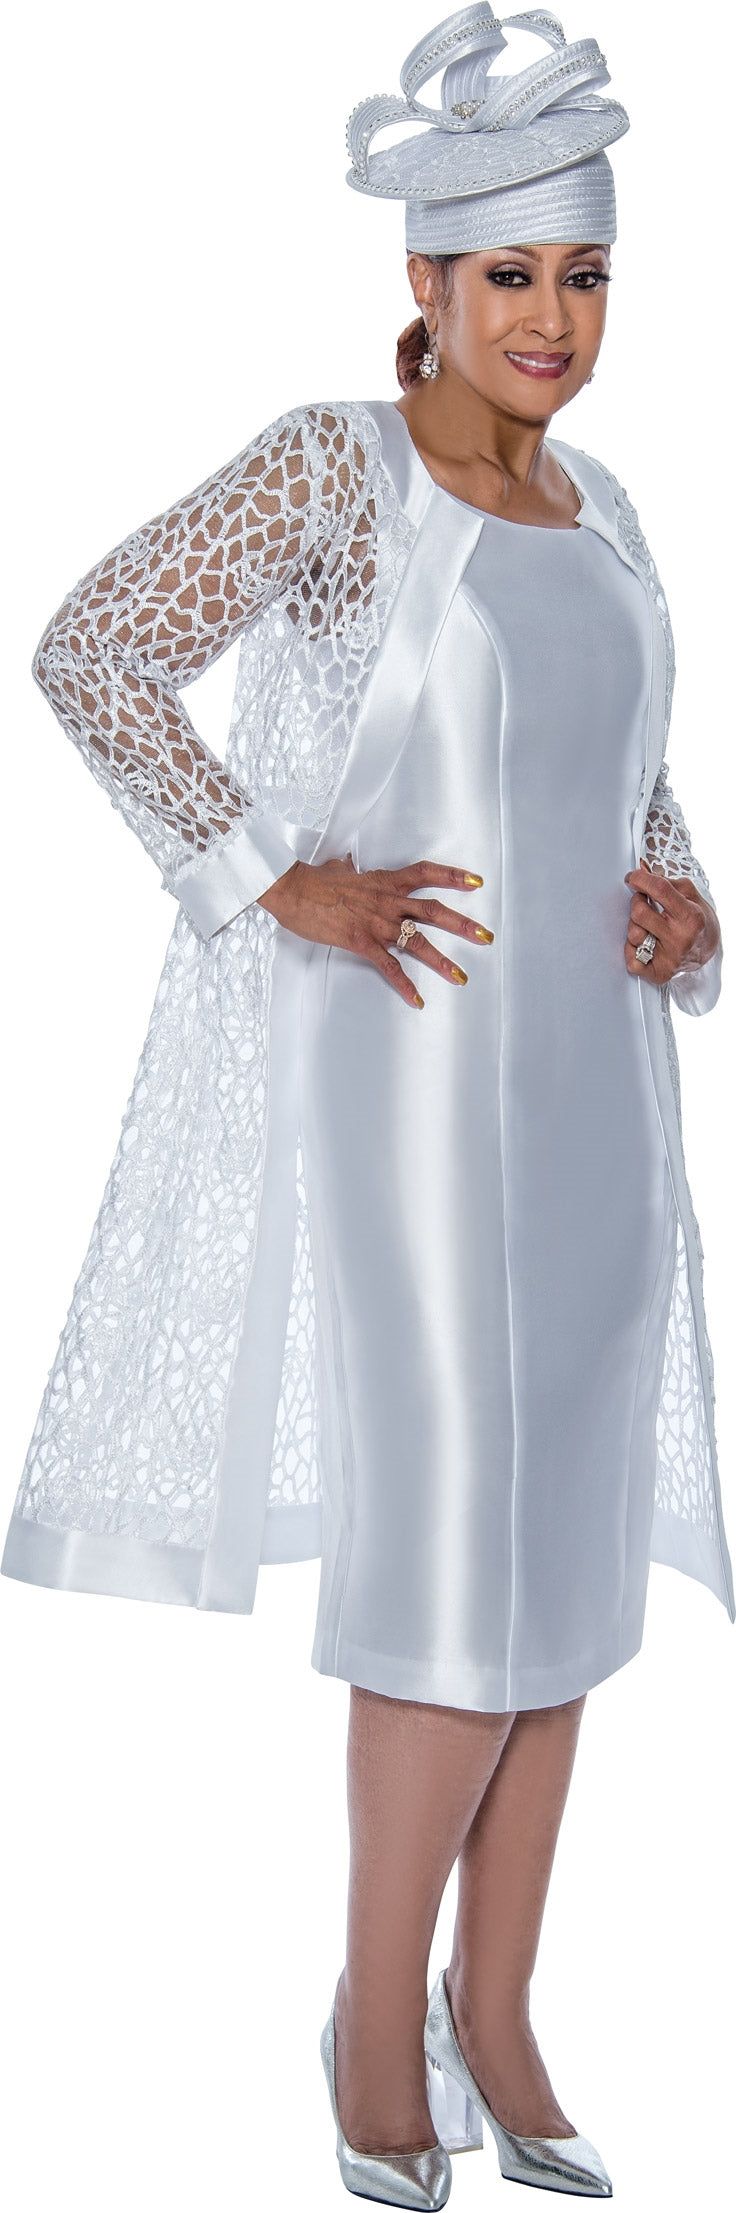 Dorinda Clark Cole Jacket Dress 4892-White - Church Suits For Less